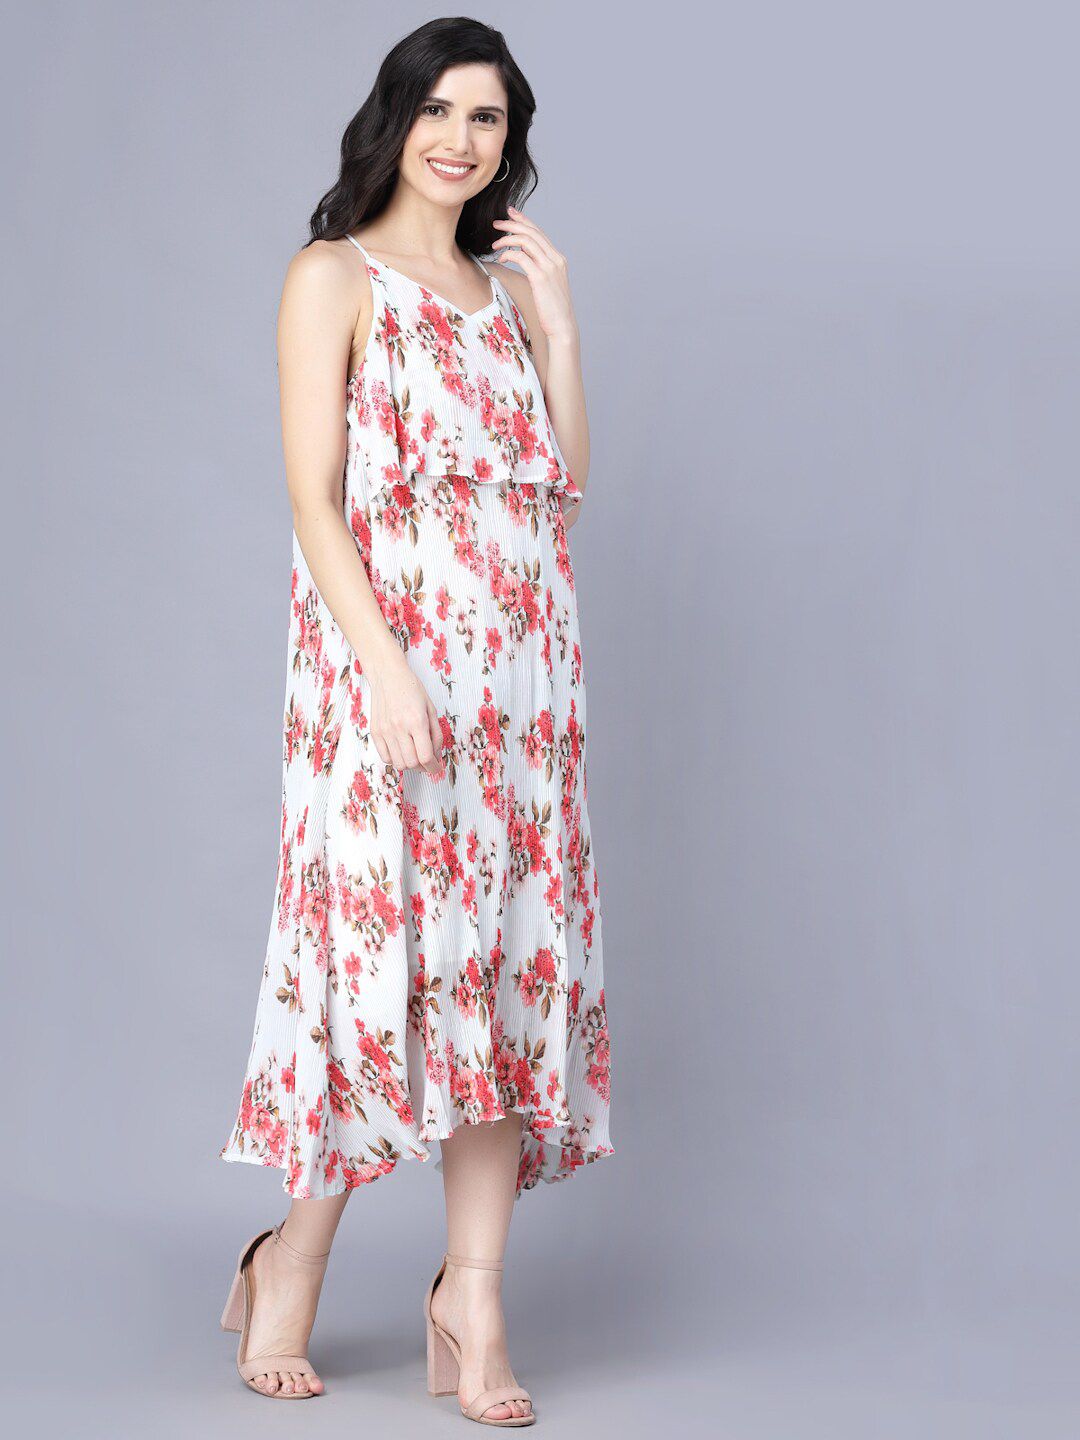 Myshka White & Red Floral Layered Midi Dress Price in India